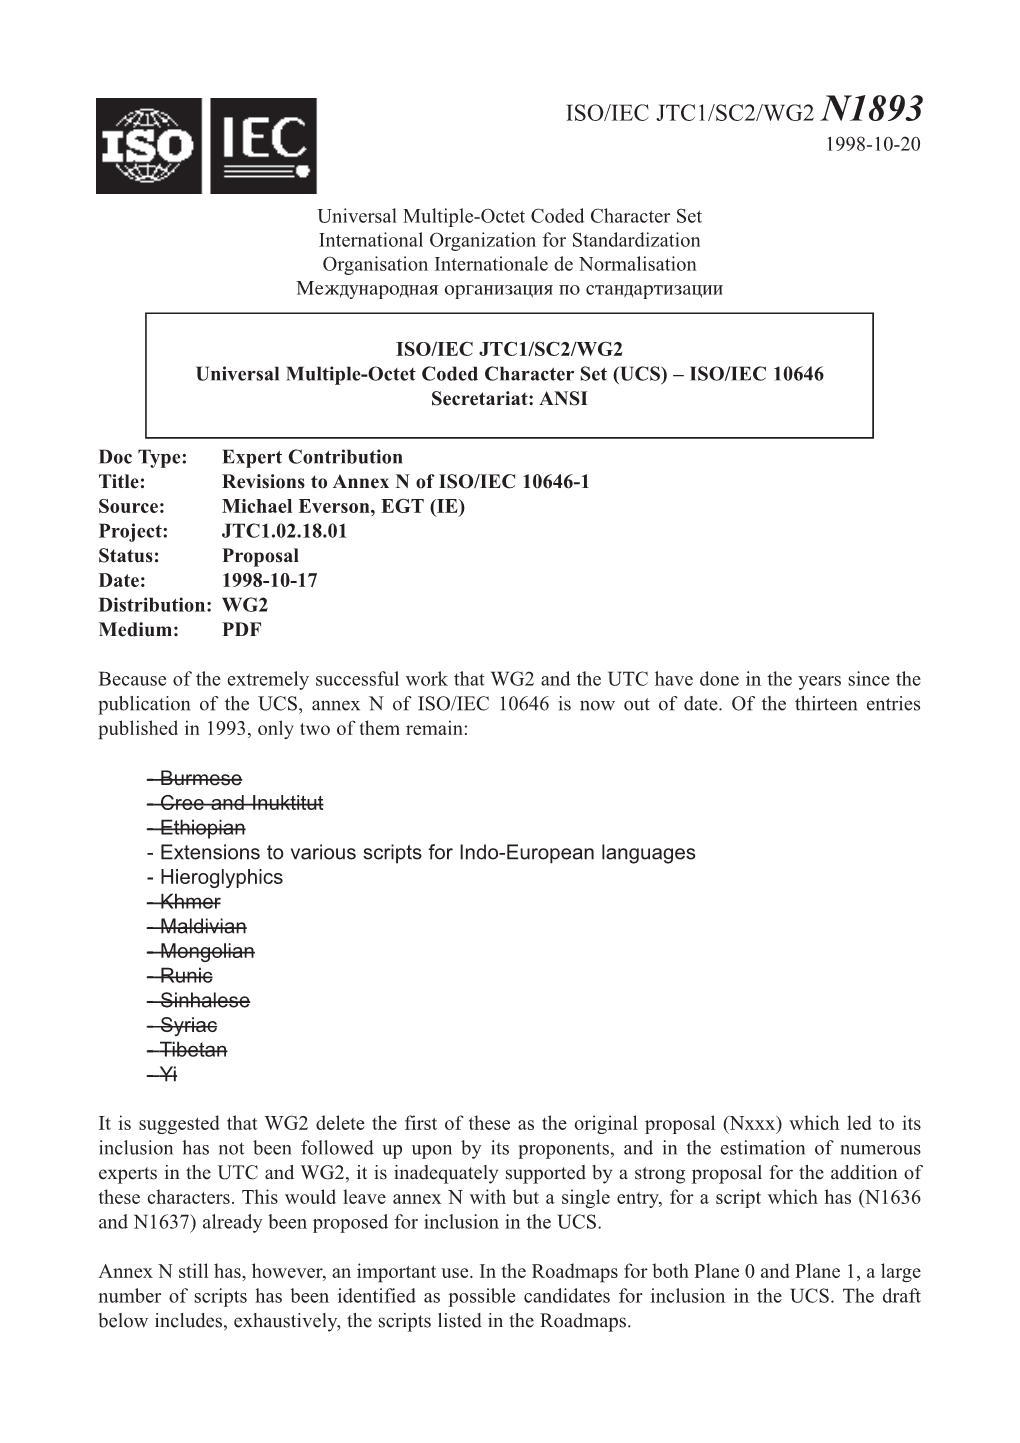 Annex N of ISO/IEC 10646-1 Source: Michael Everson, EGT(IE) Project: JTC1.02.18.01 Status: Proposal Date: 1998-10-17 Distribution:WG2 Medium: PDF